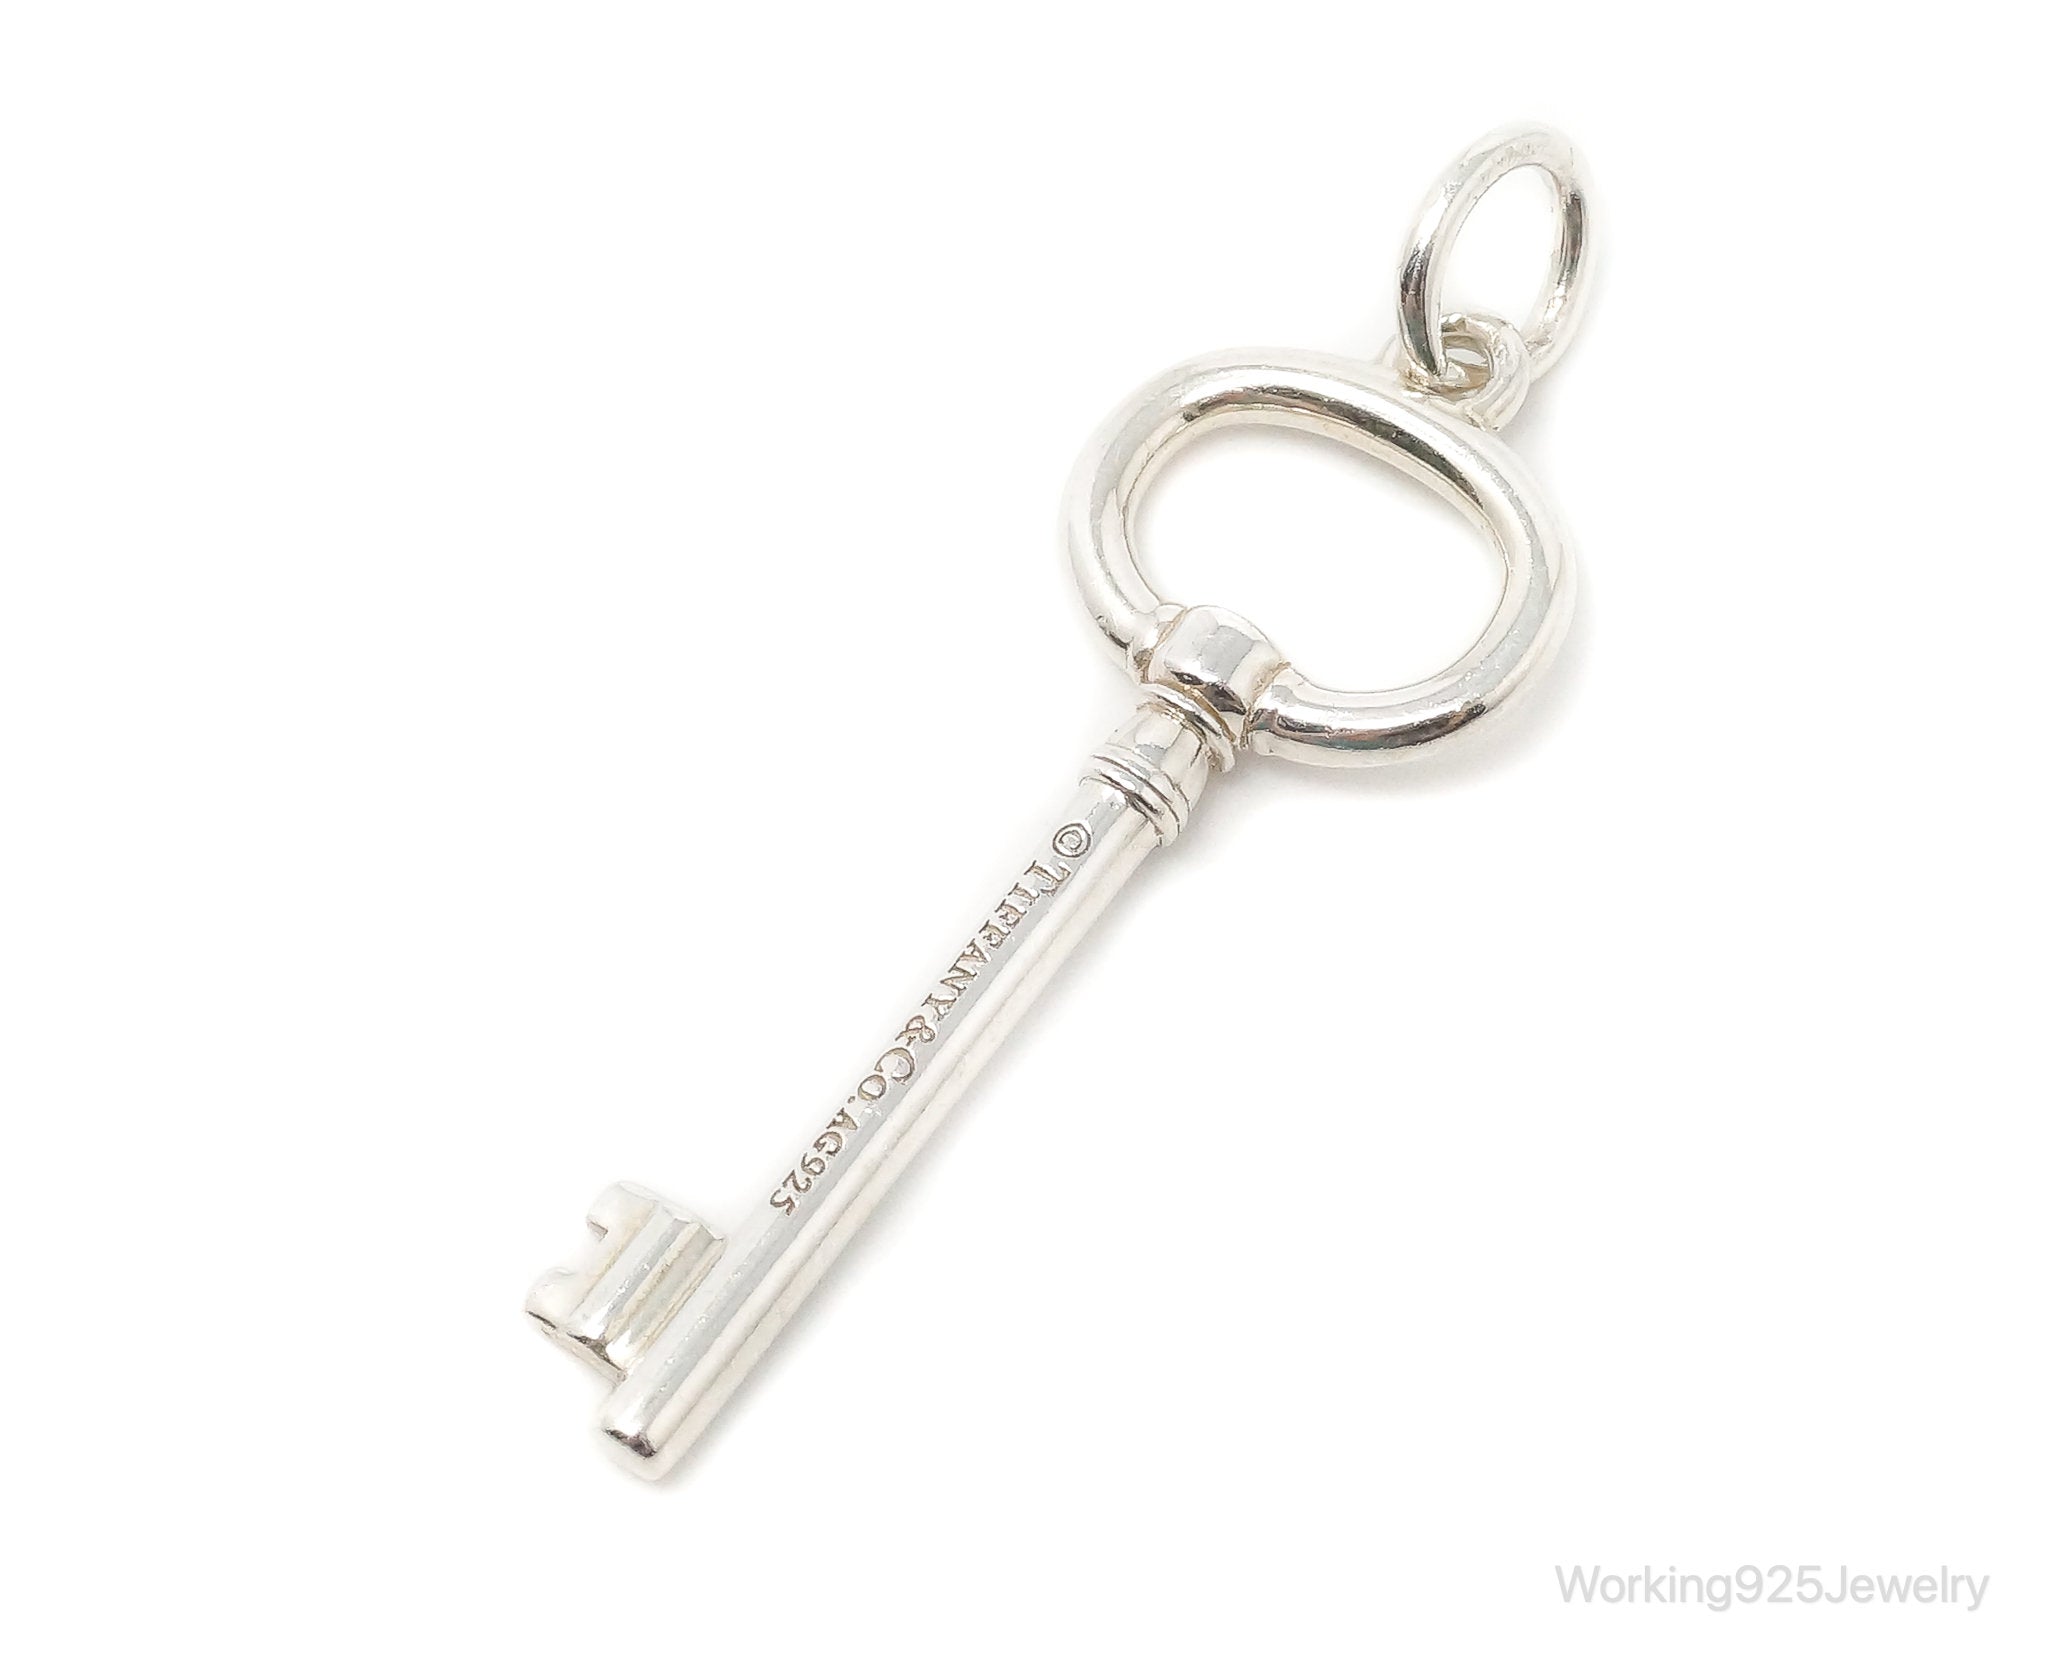 Designer Tiffany & Company Large Oval Key Sterling Silver NecklacePendant